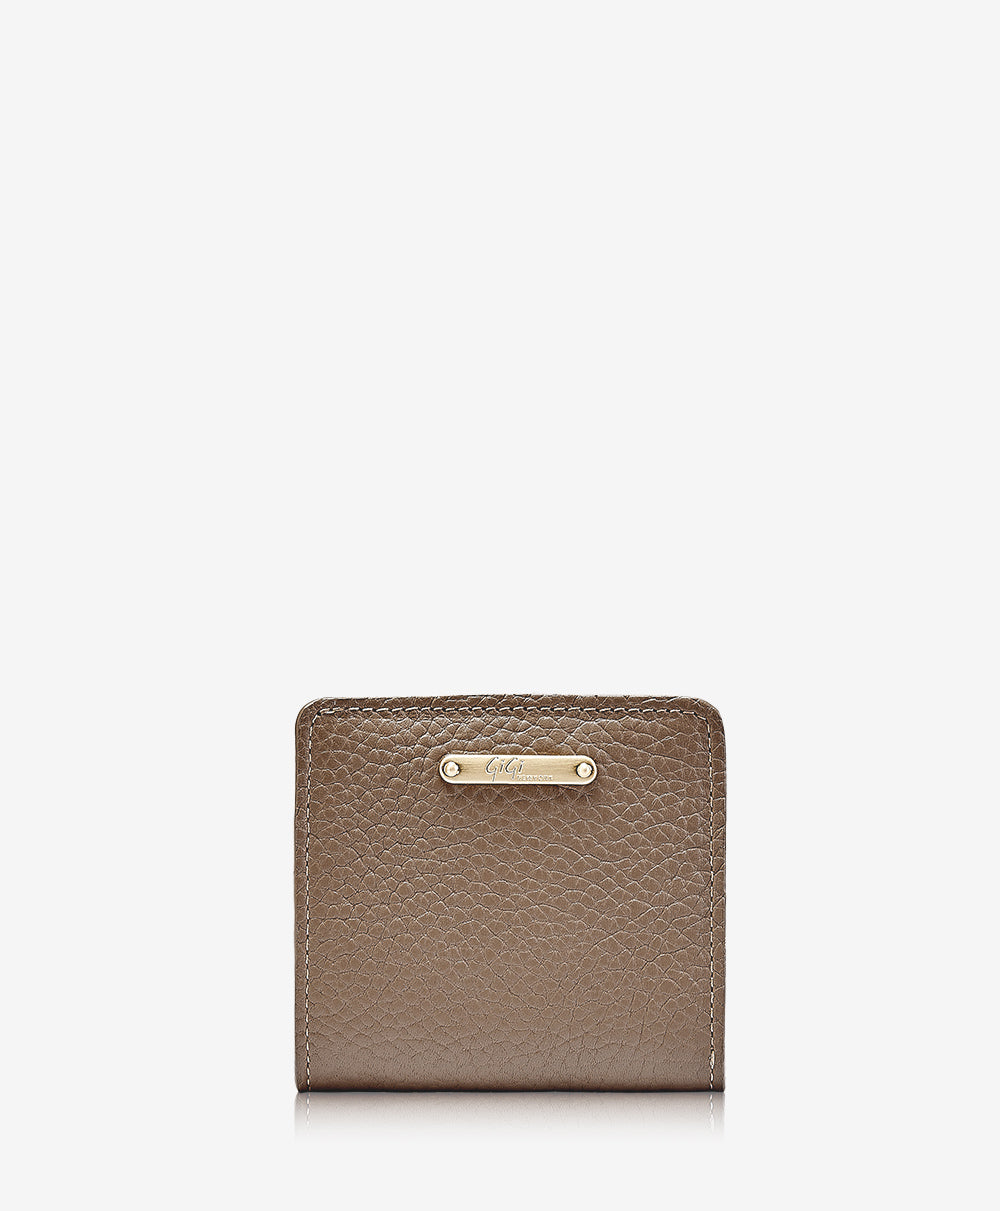 GiGi New York Mini Foldover Wallet Driftwood Pebble Grain Leather